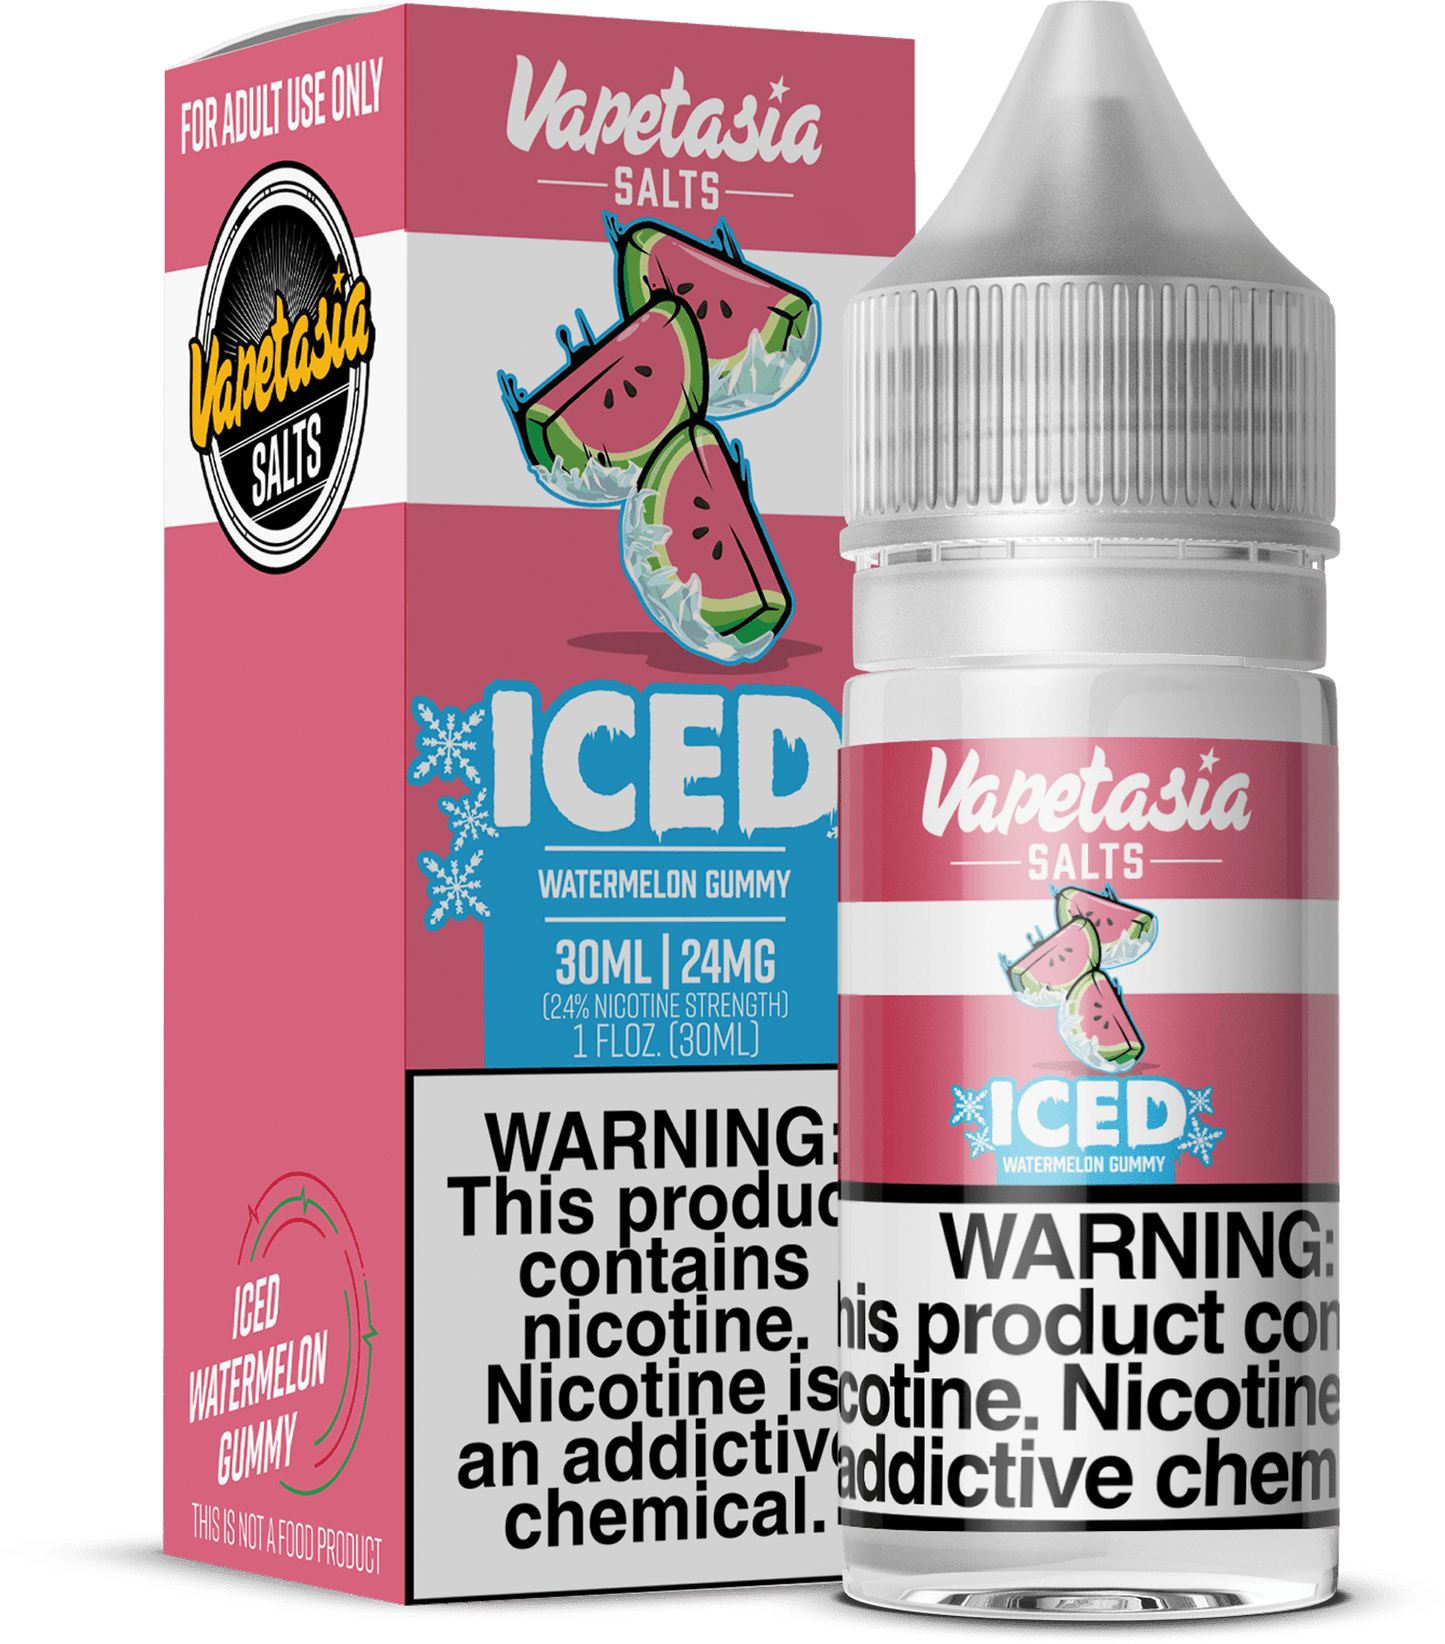 ICED Watermelon Gummy SALT - Vapetasia - 30mL